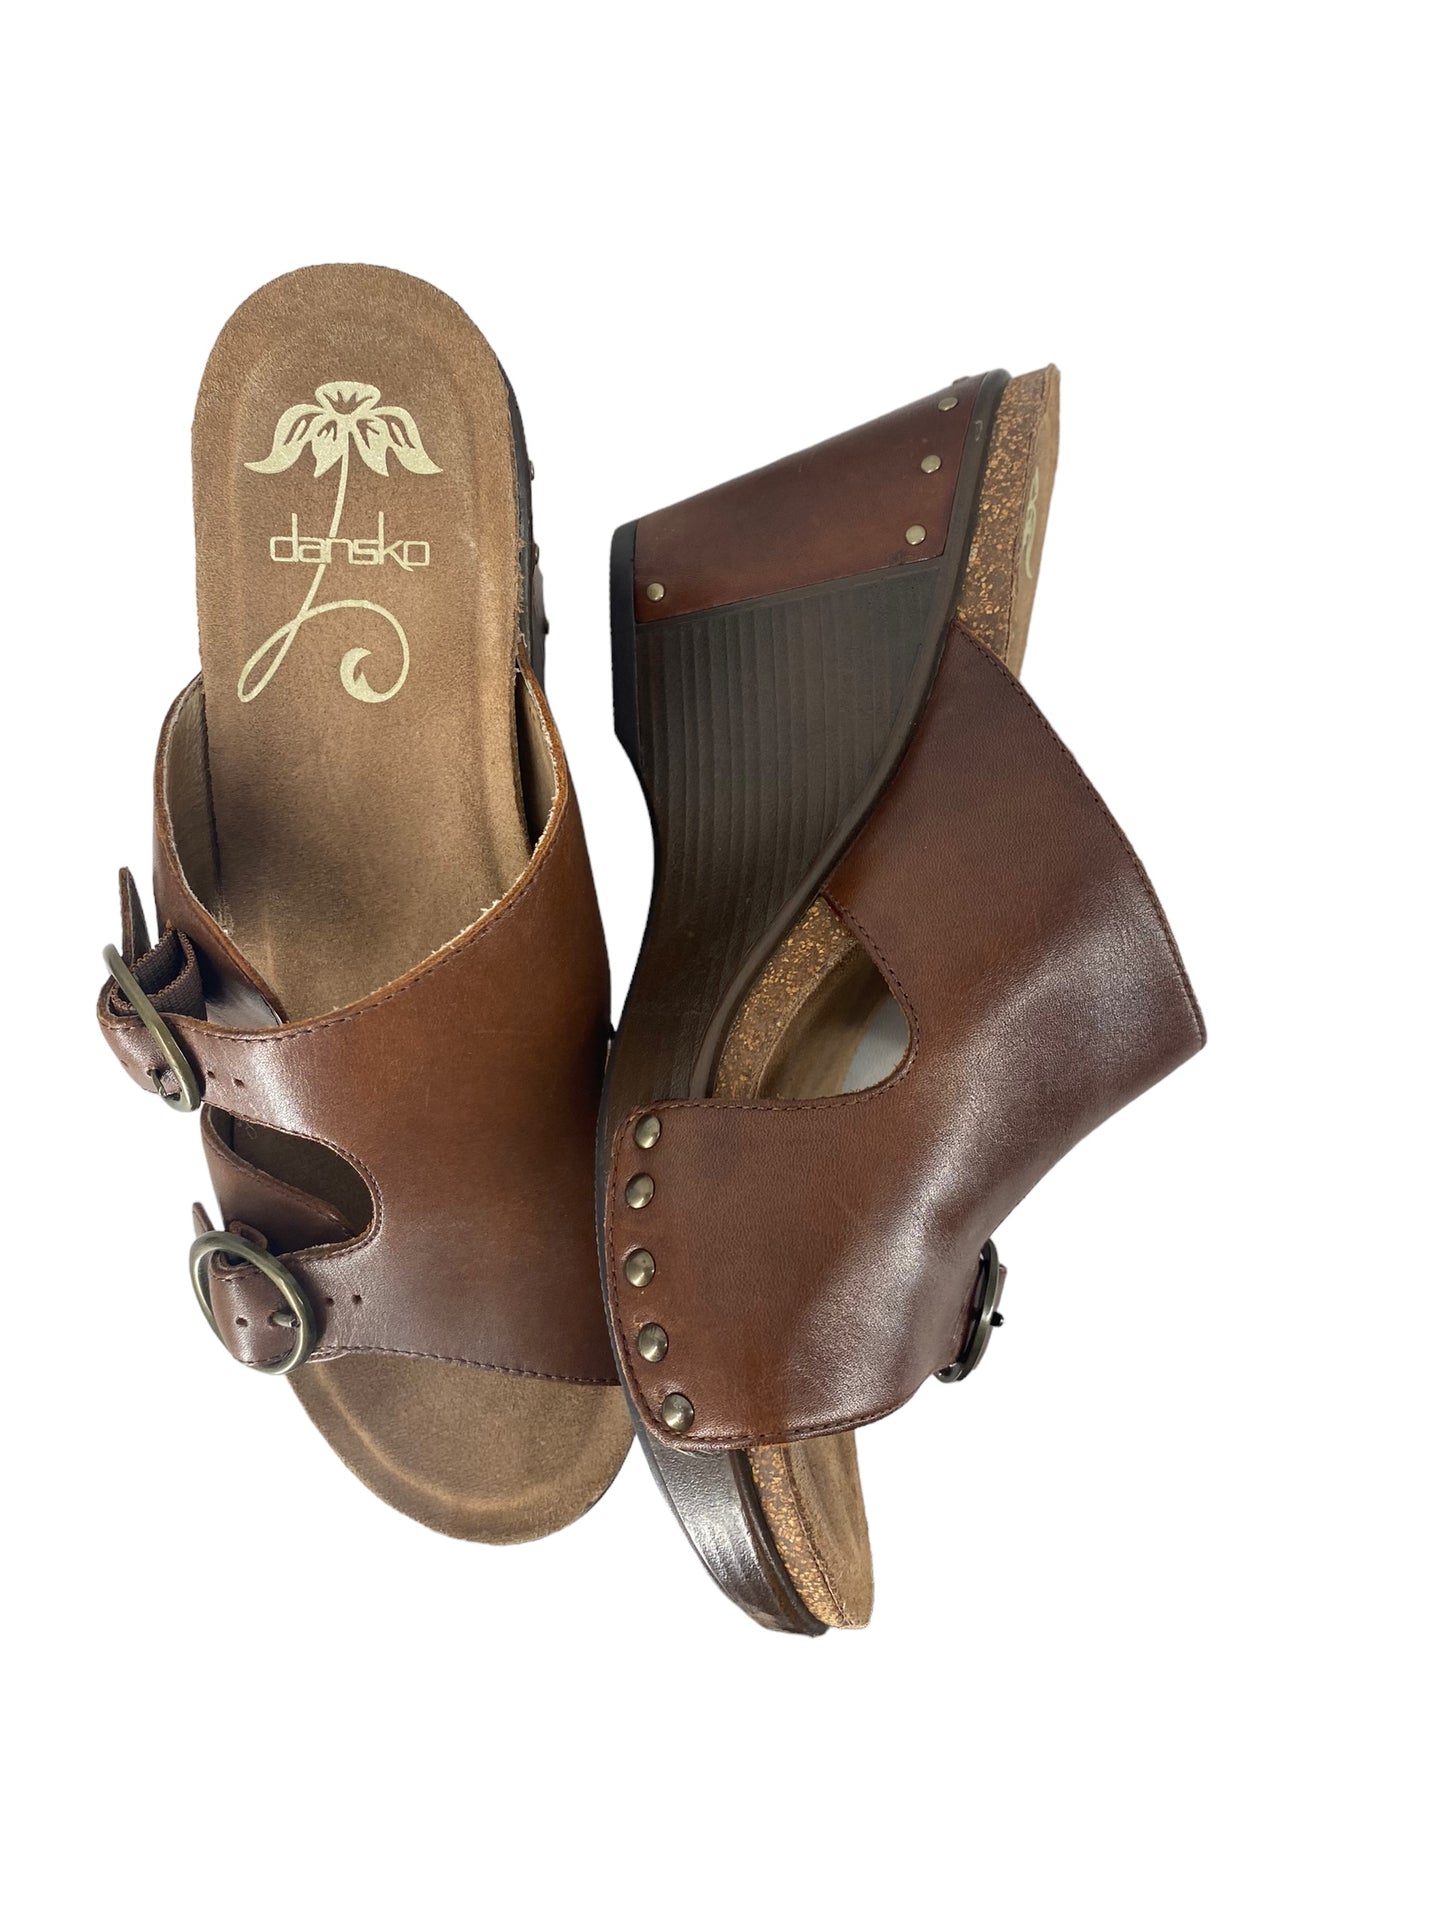 Shoes Heels Wedge By Dansko  Size: 9